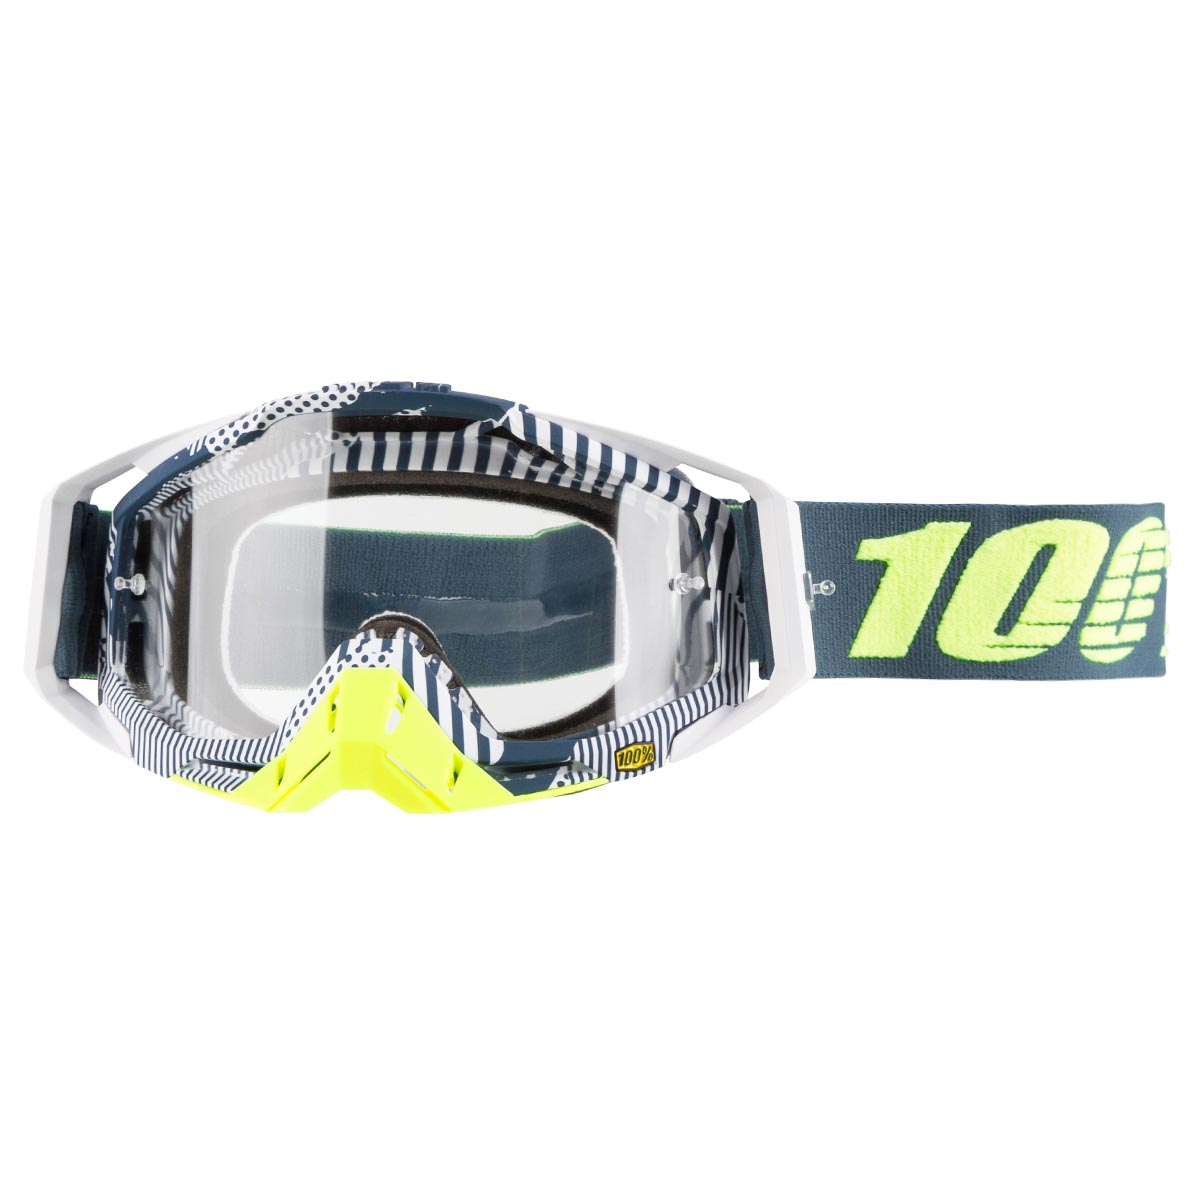 100% Goggle The Racecraft Eclipse - Clear Anti-Fog